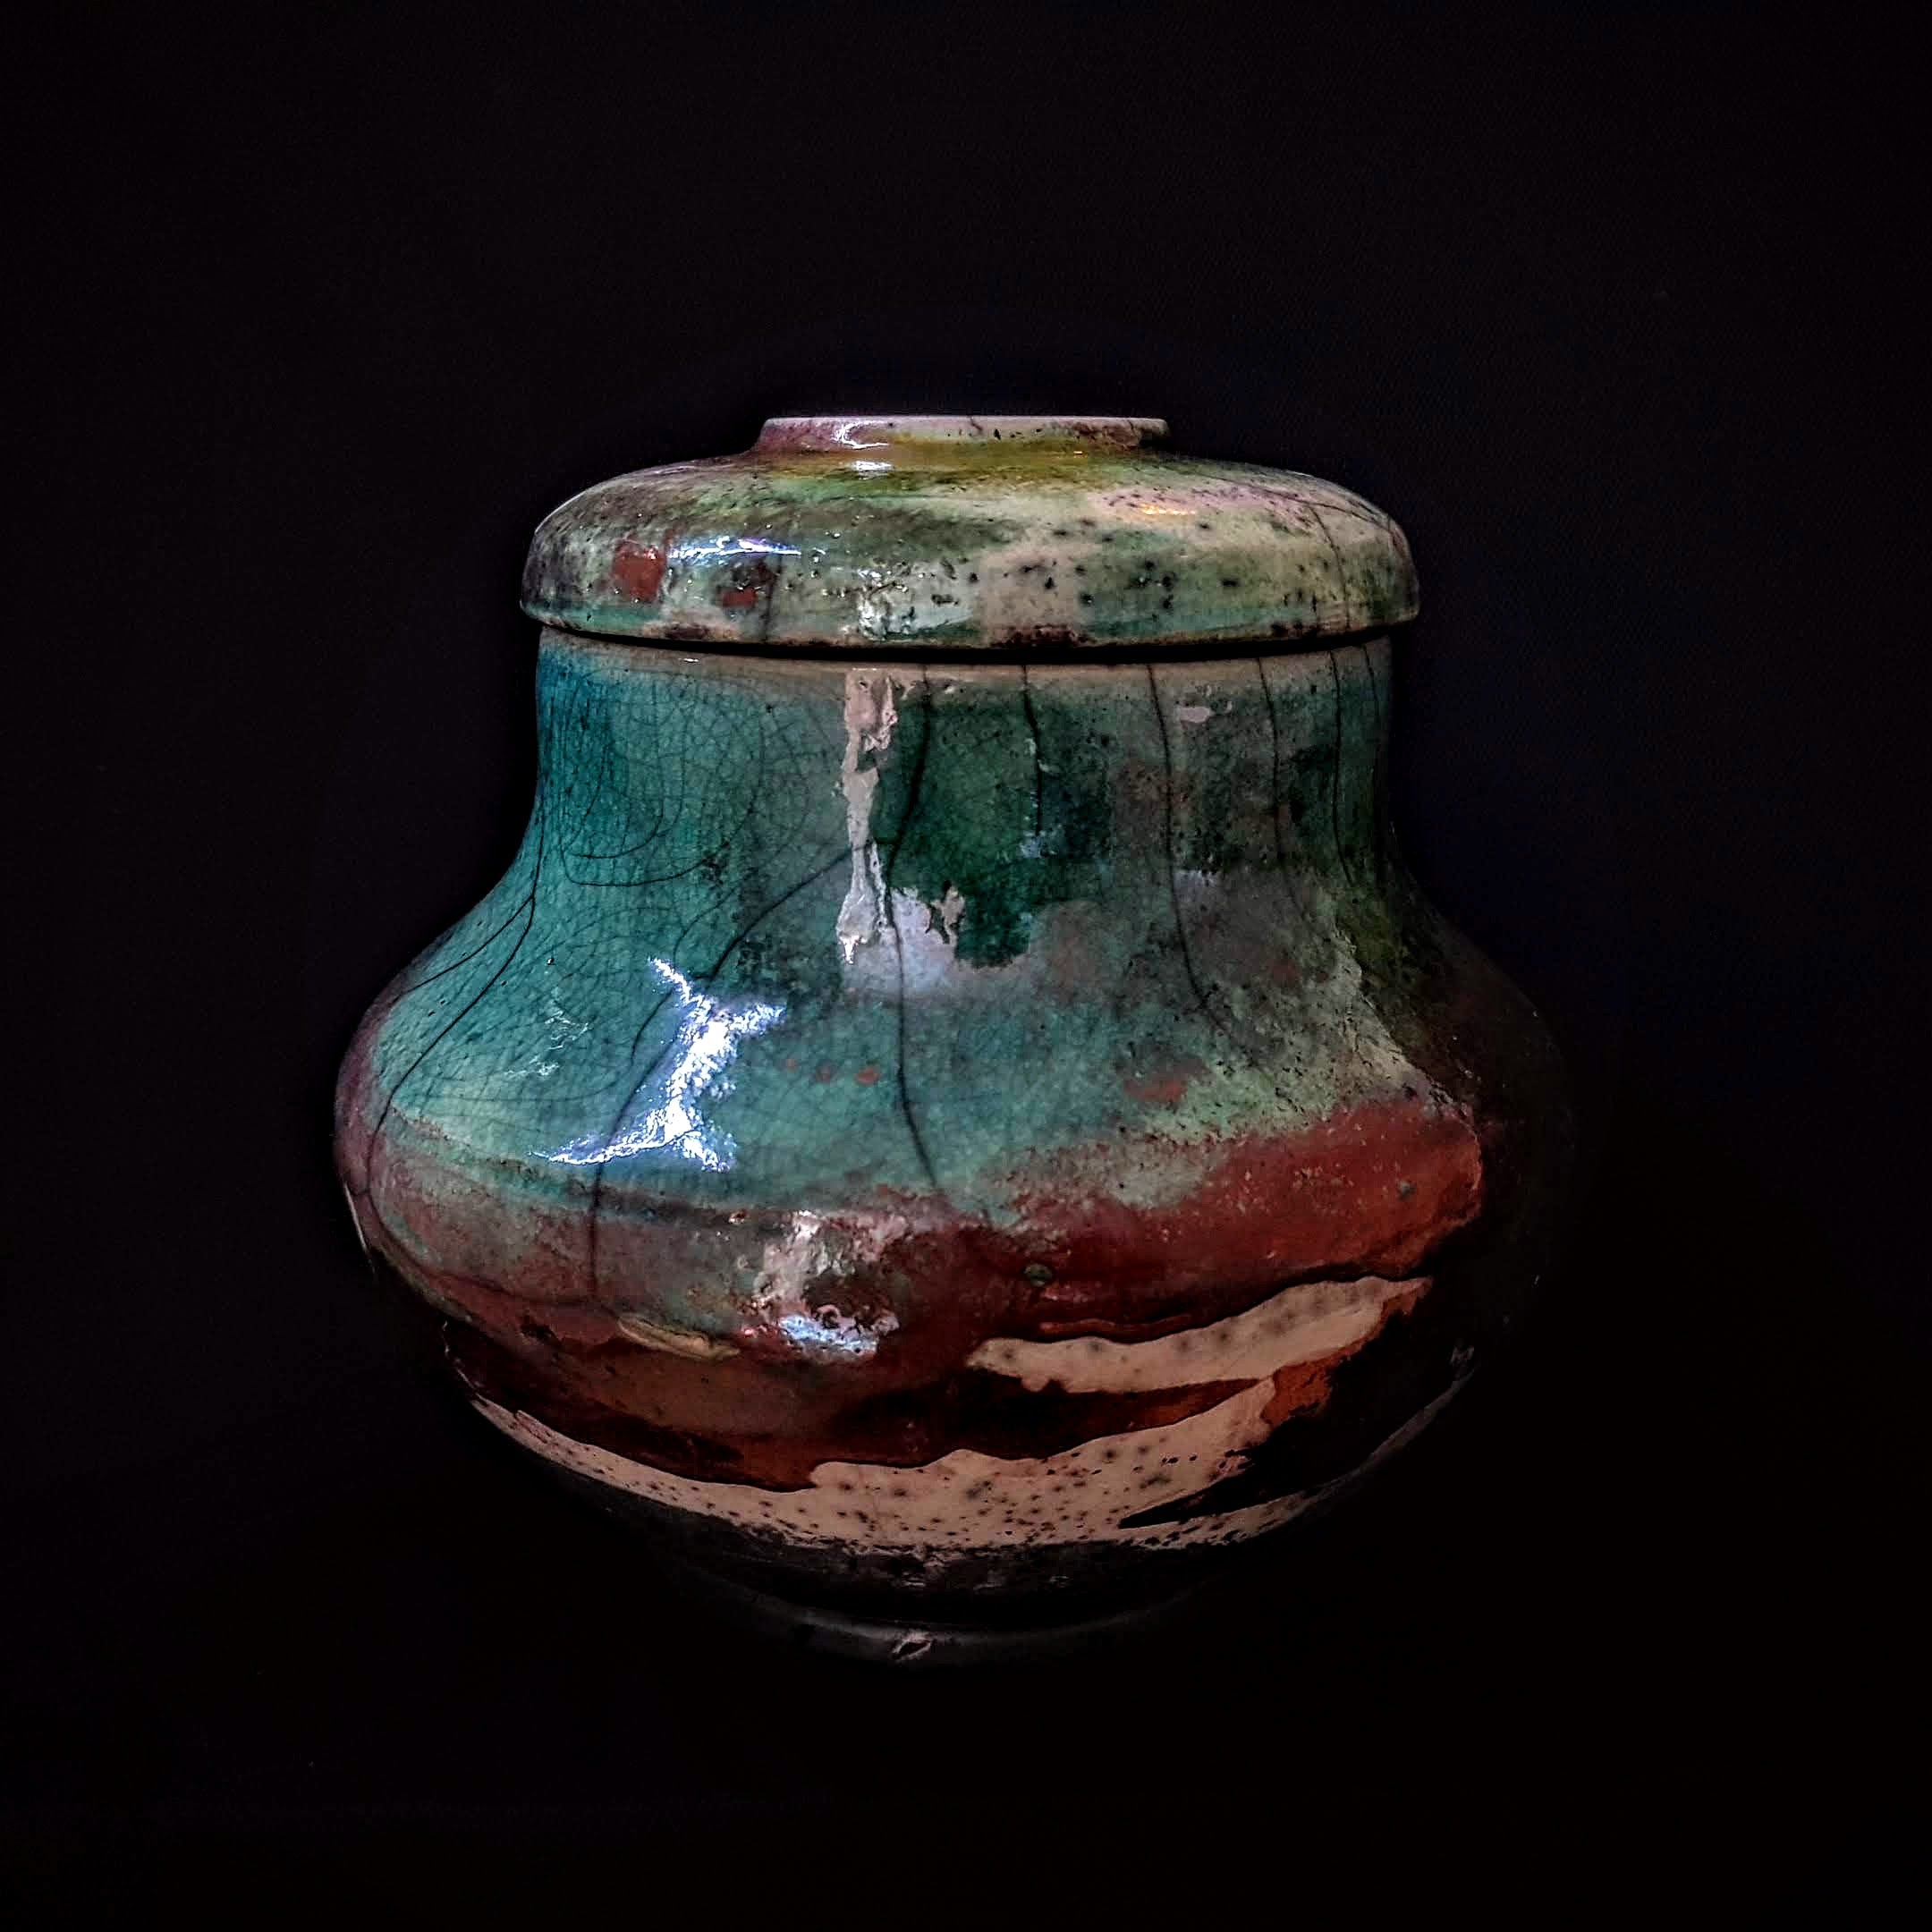 Artistic Keepsake For Pet Ashes | Urn For Animals | Vintage Keepsake Box | Handmade Jewelry Box | Raku Urn | Cremation Urn For Human Ashes